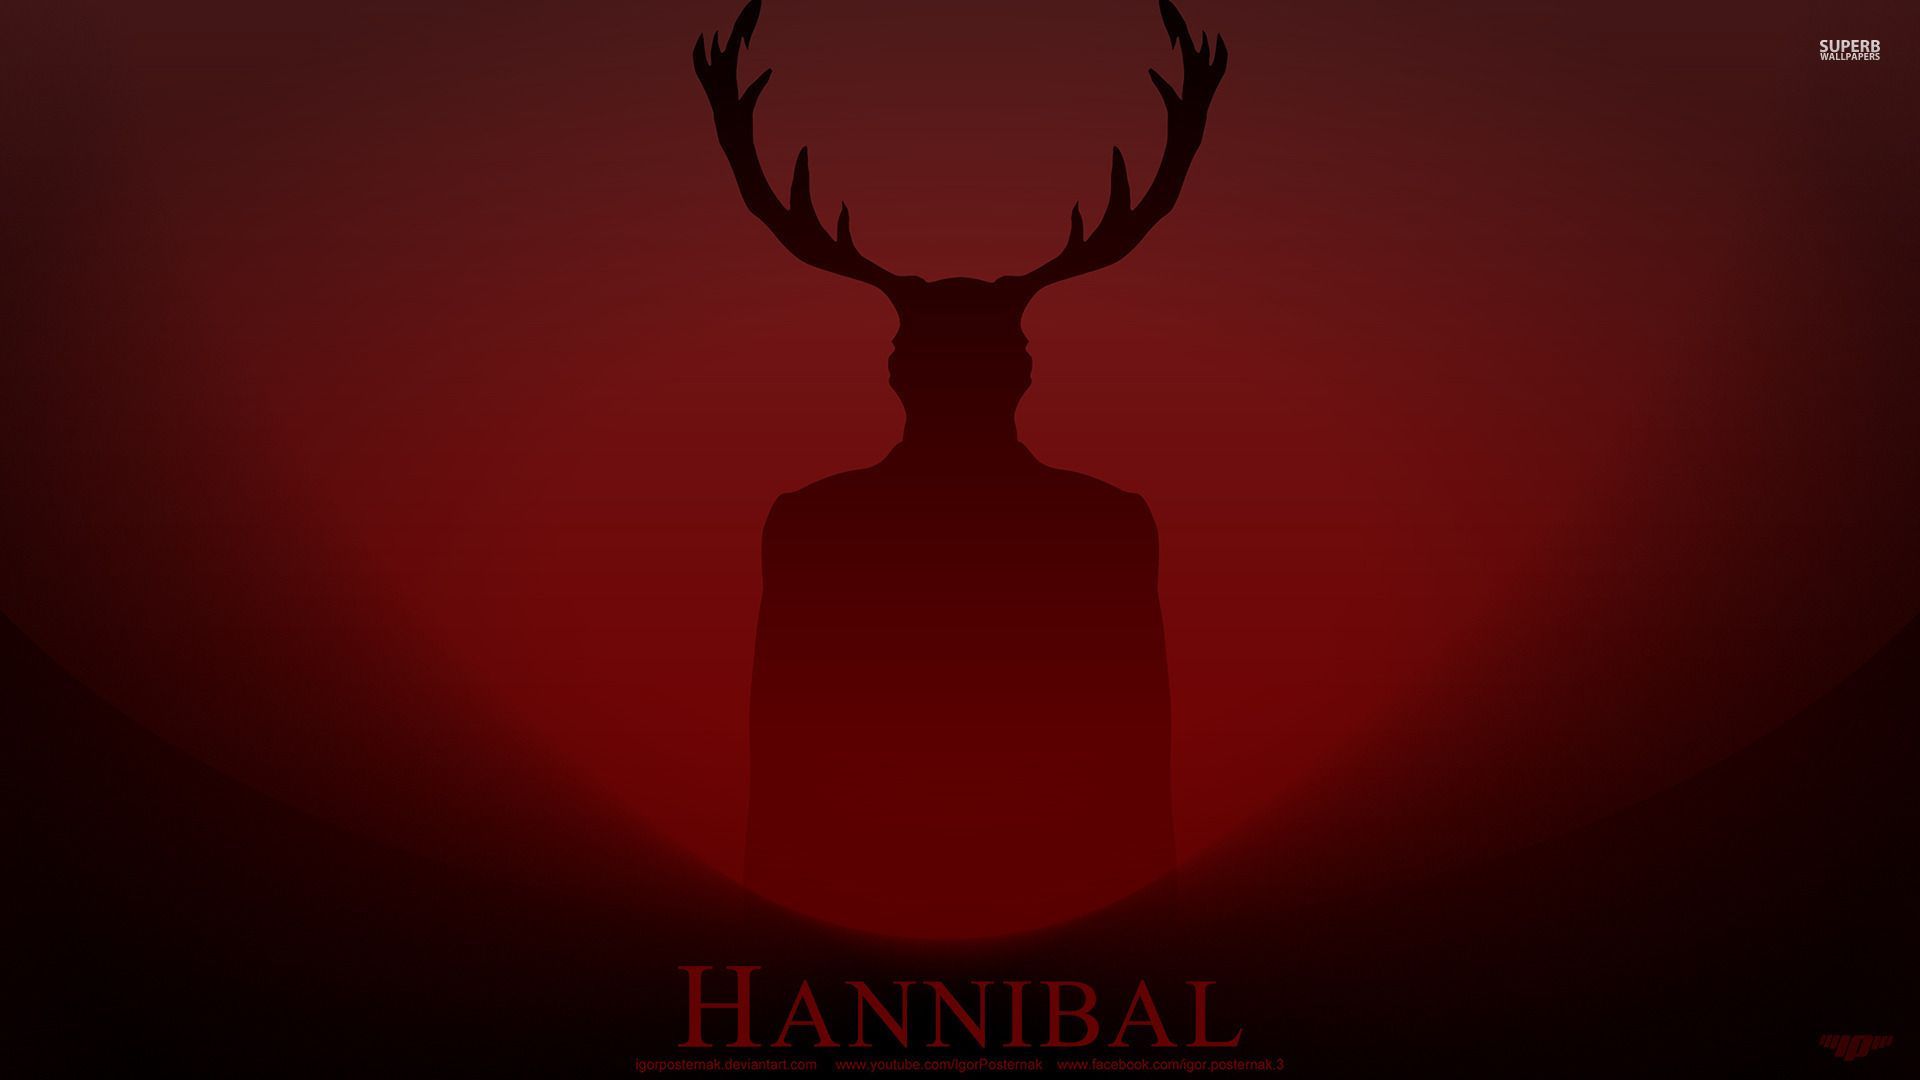 NBC Hannibal Wallpaper by thecannibalfactory on DeviantArt